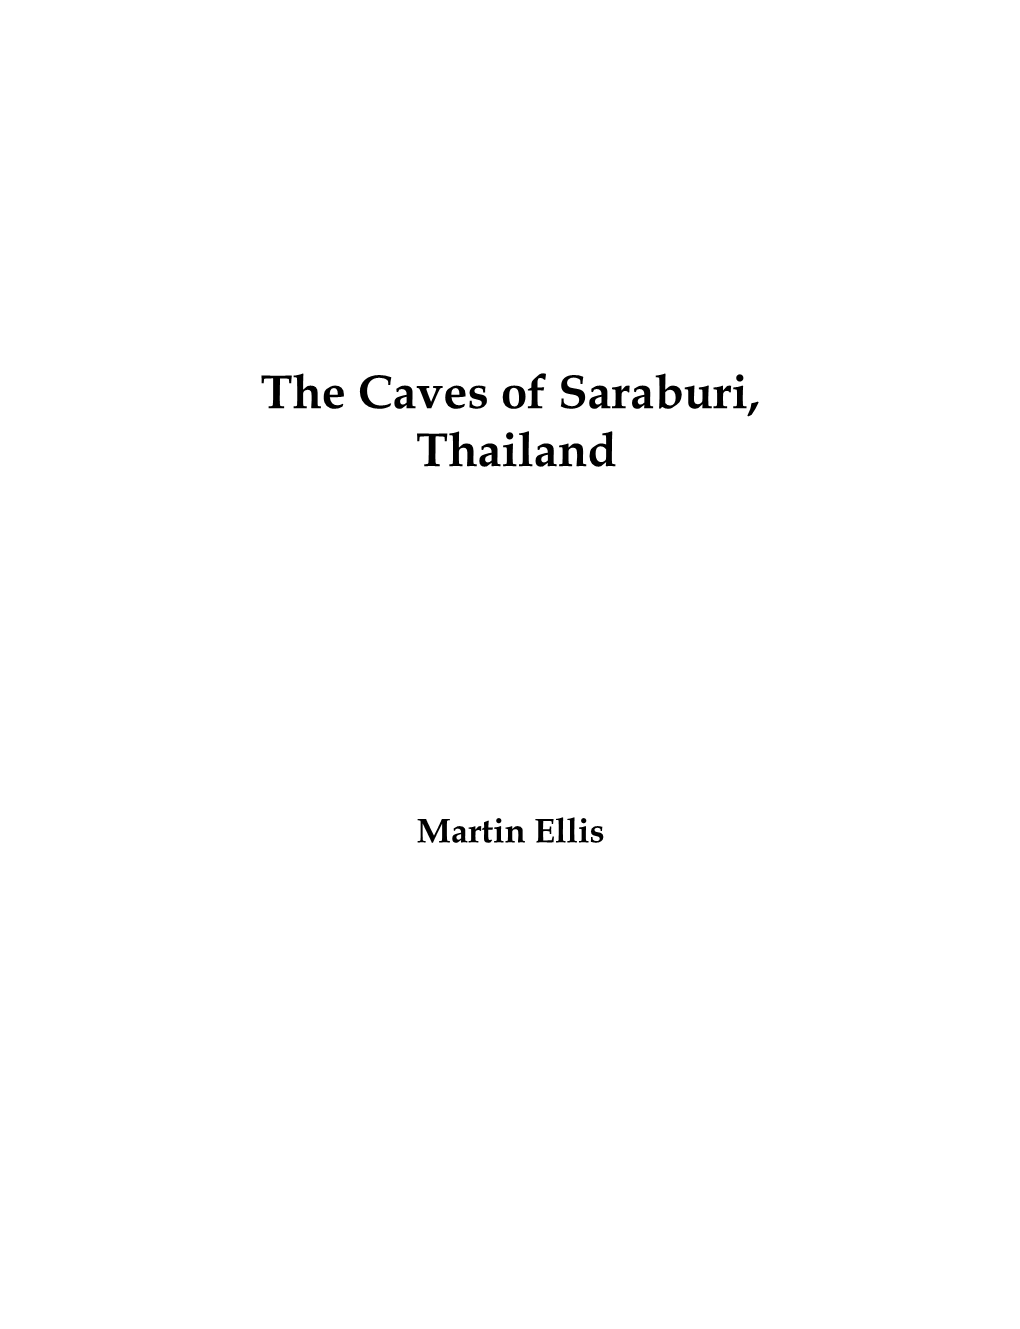 The Caves of Saraburi, Thailand